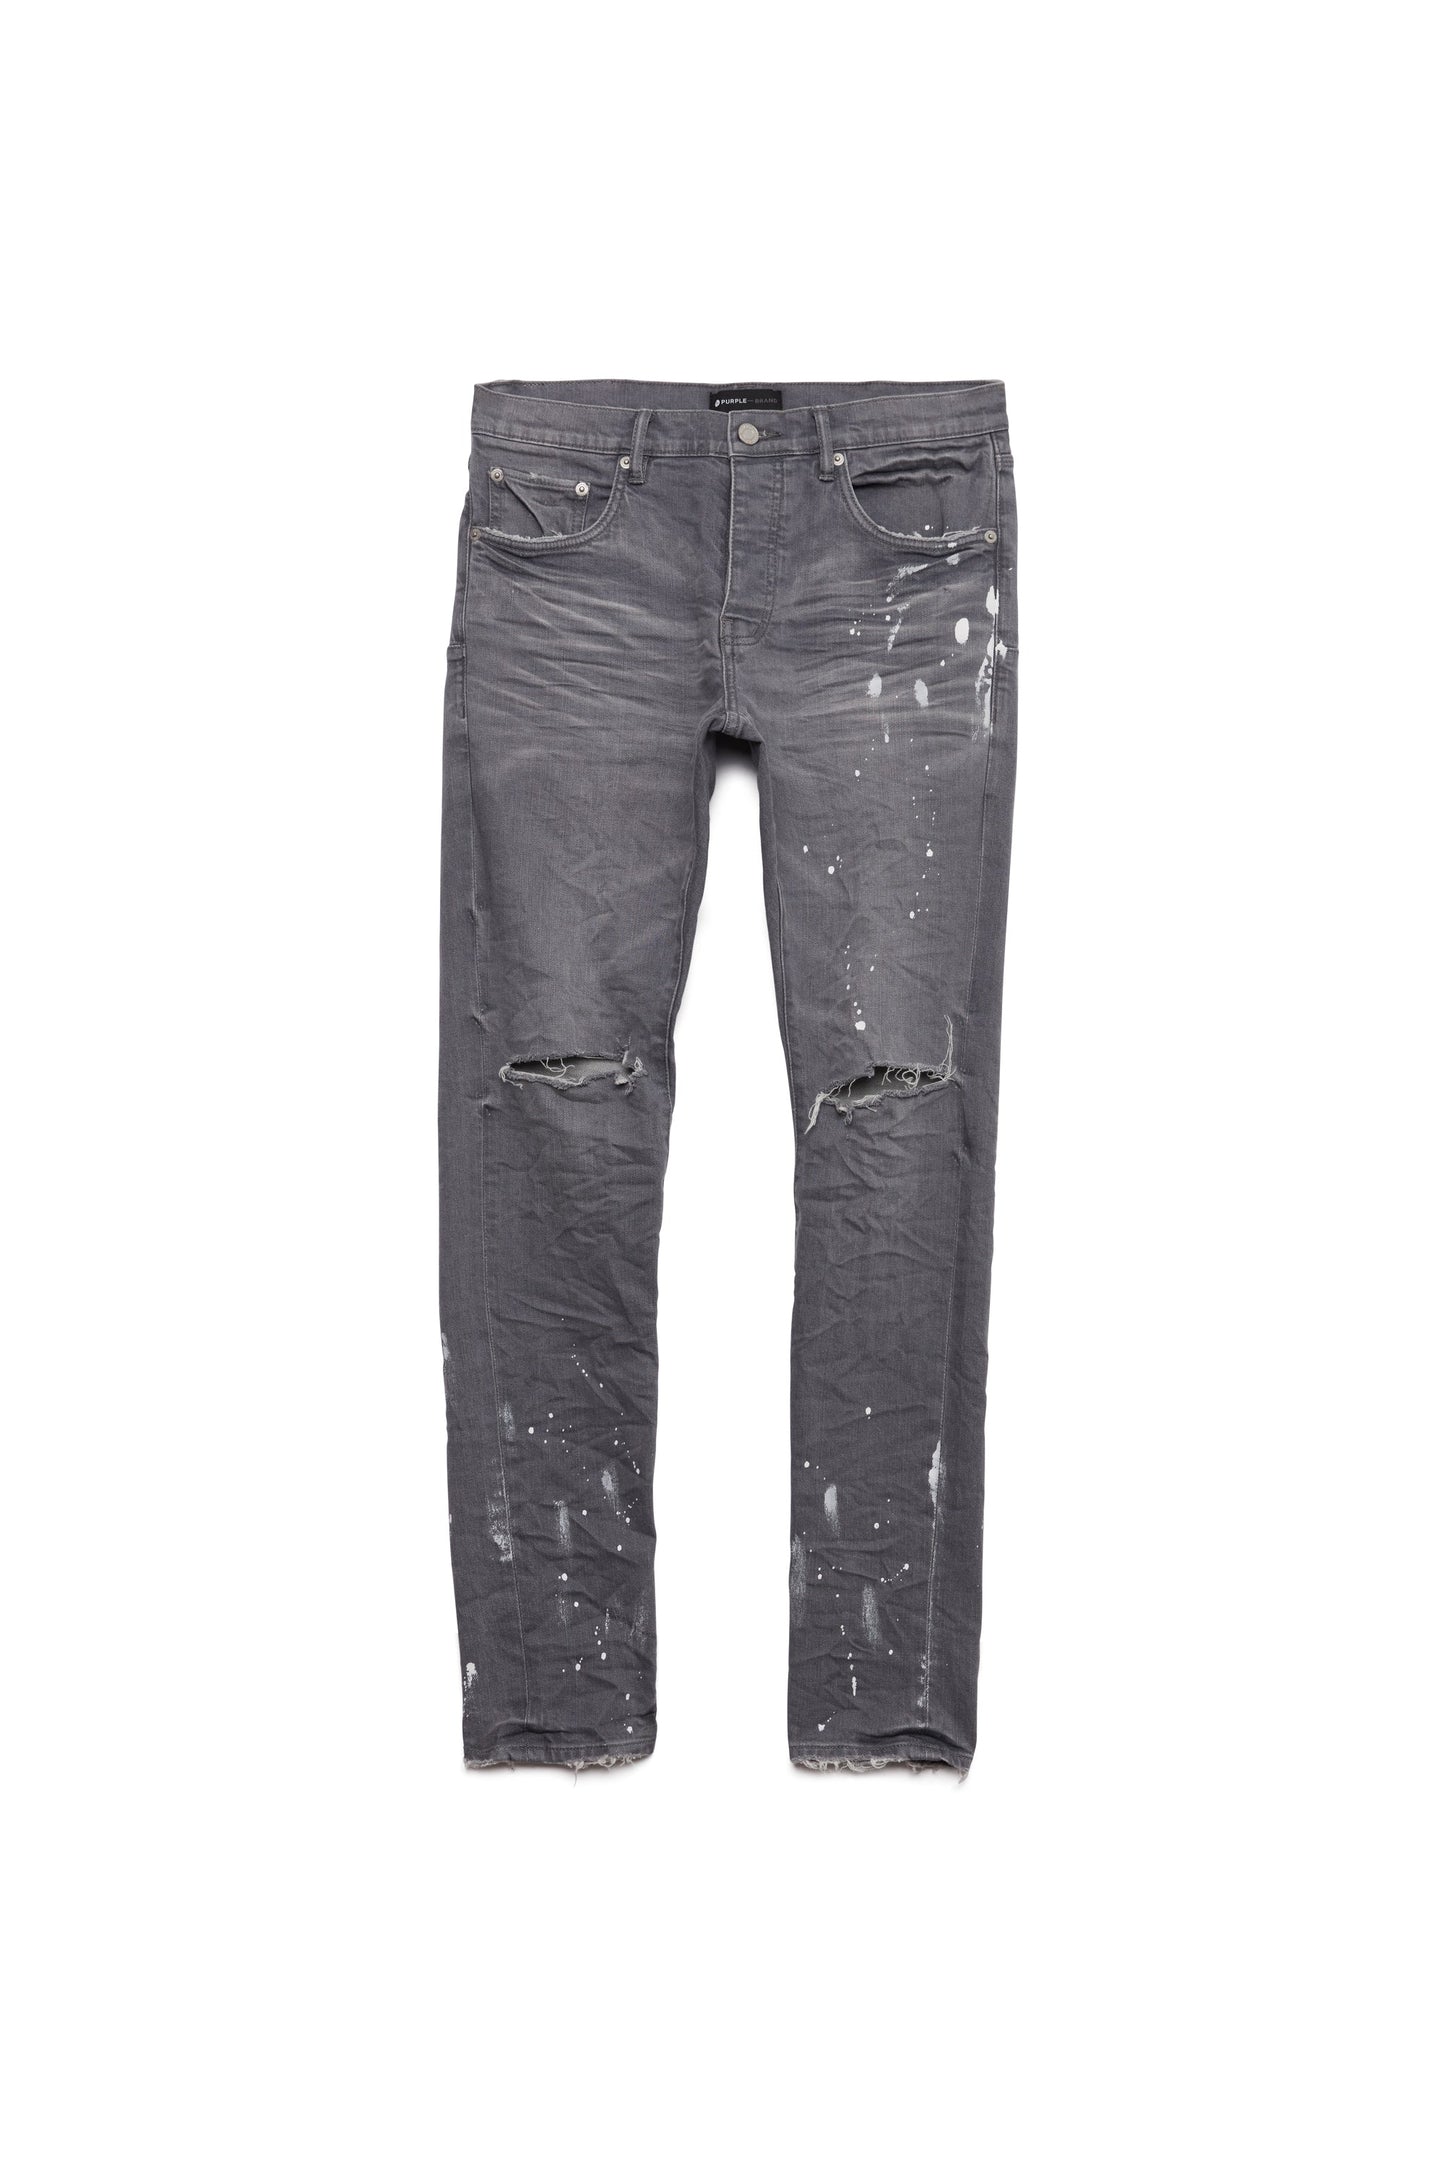 PURPLE BRAND - Men's Denim Jean - Low Rise Skinny - Style No. P001 - Worn Grey Knee Slit - Front